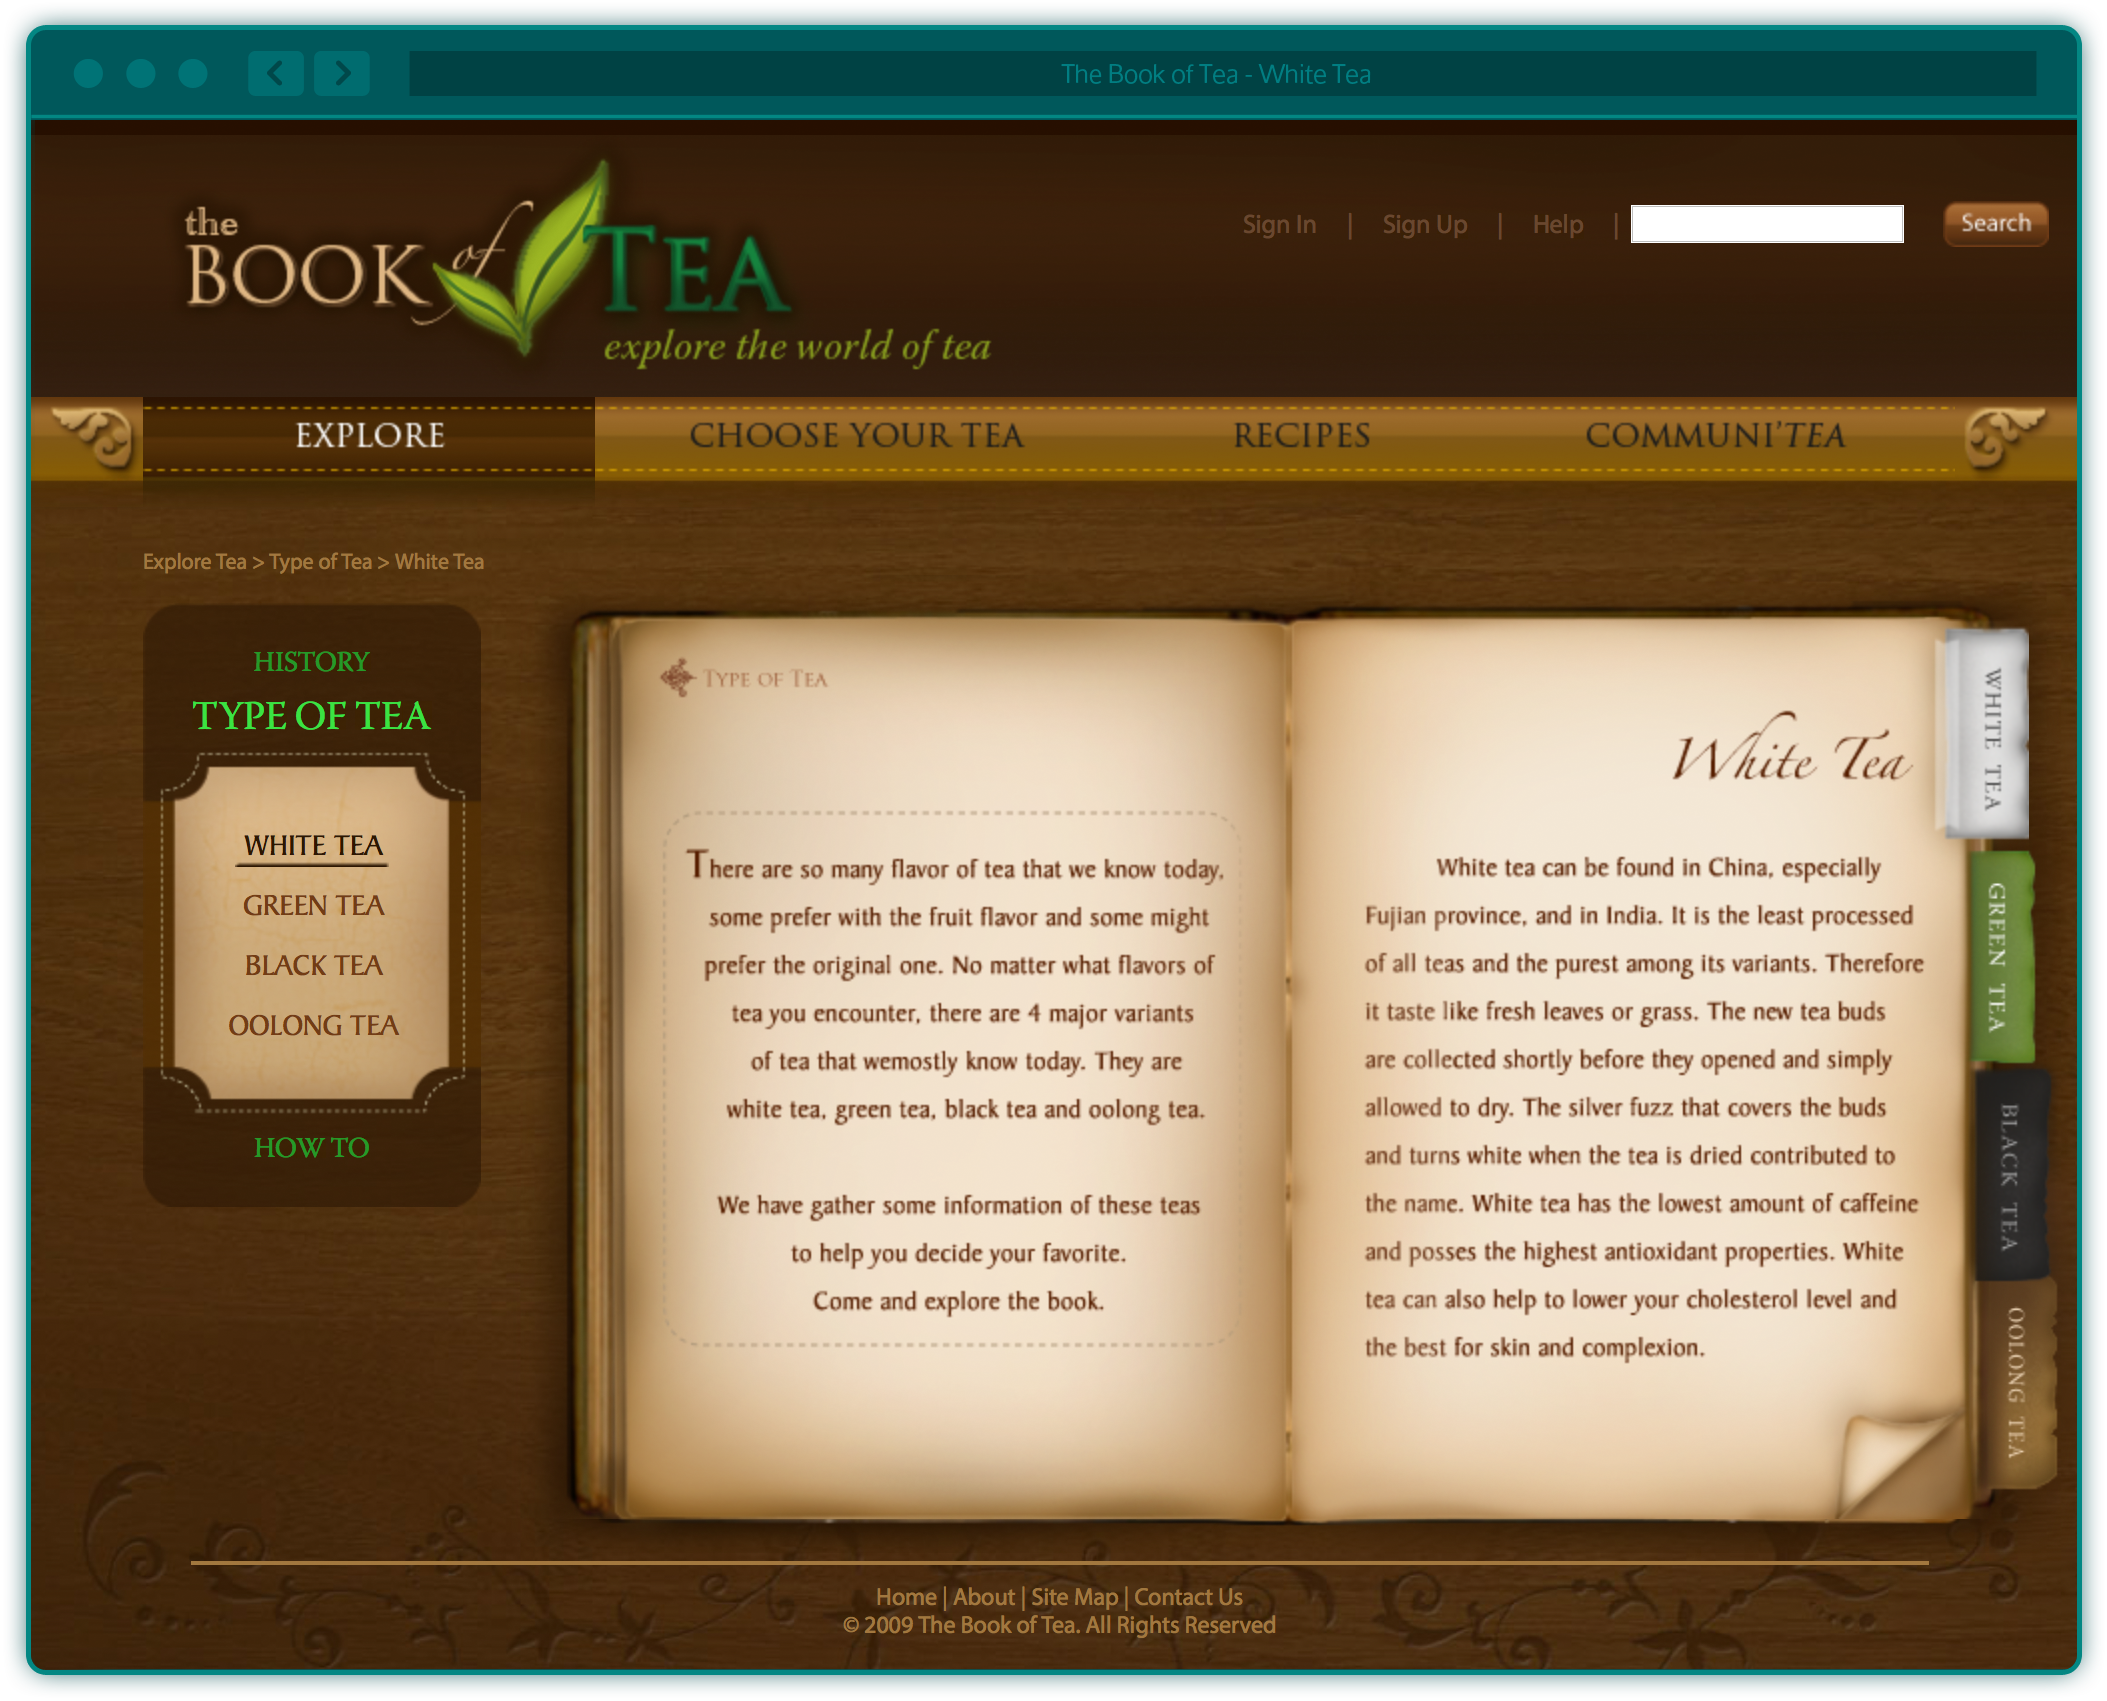 The Book of Tea website - White tea